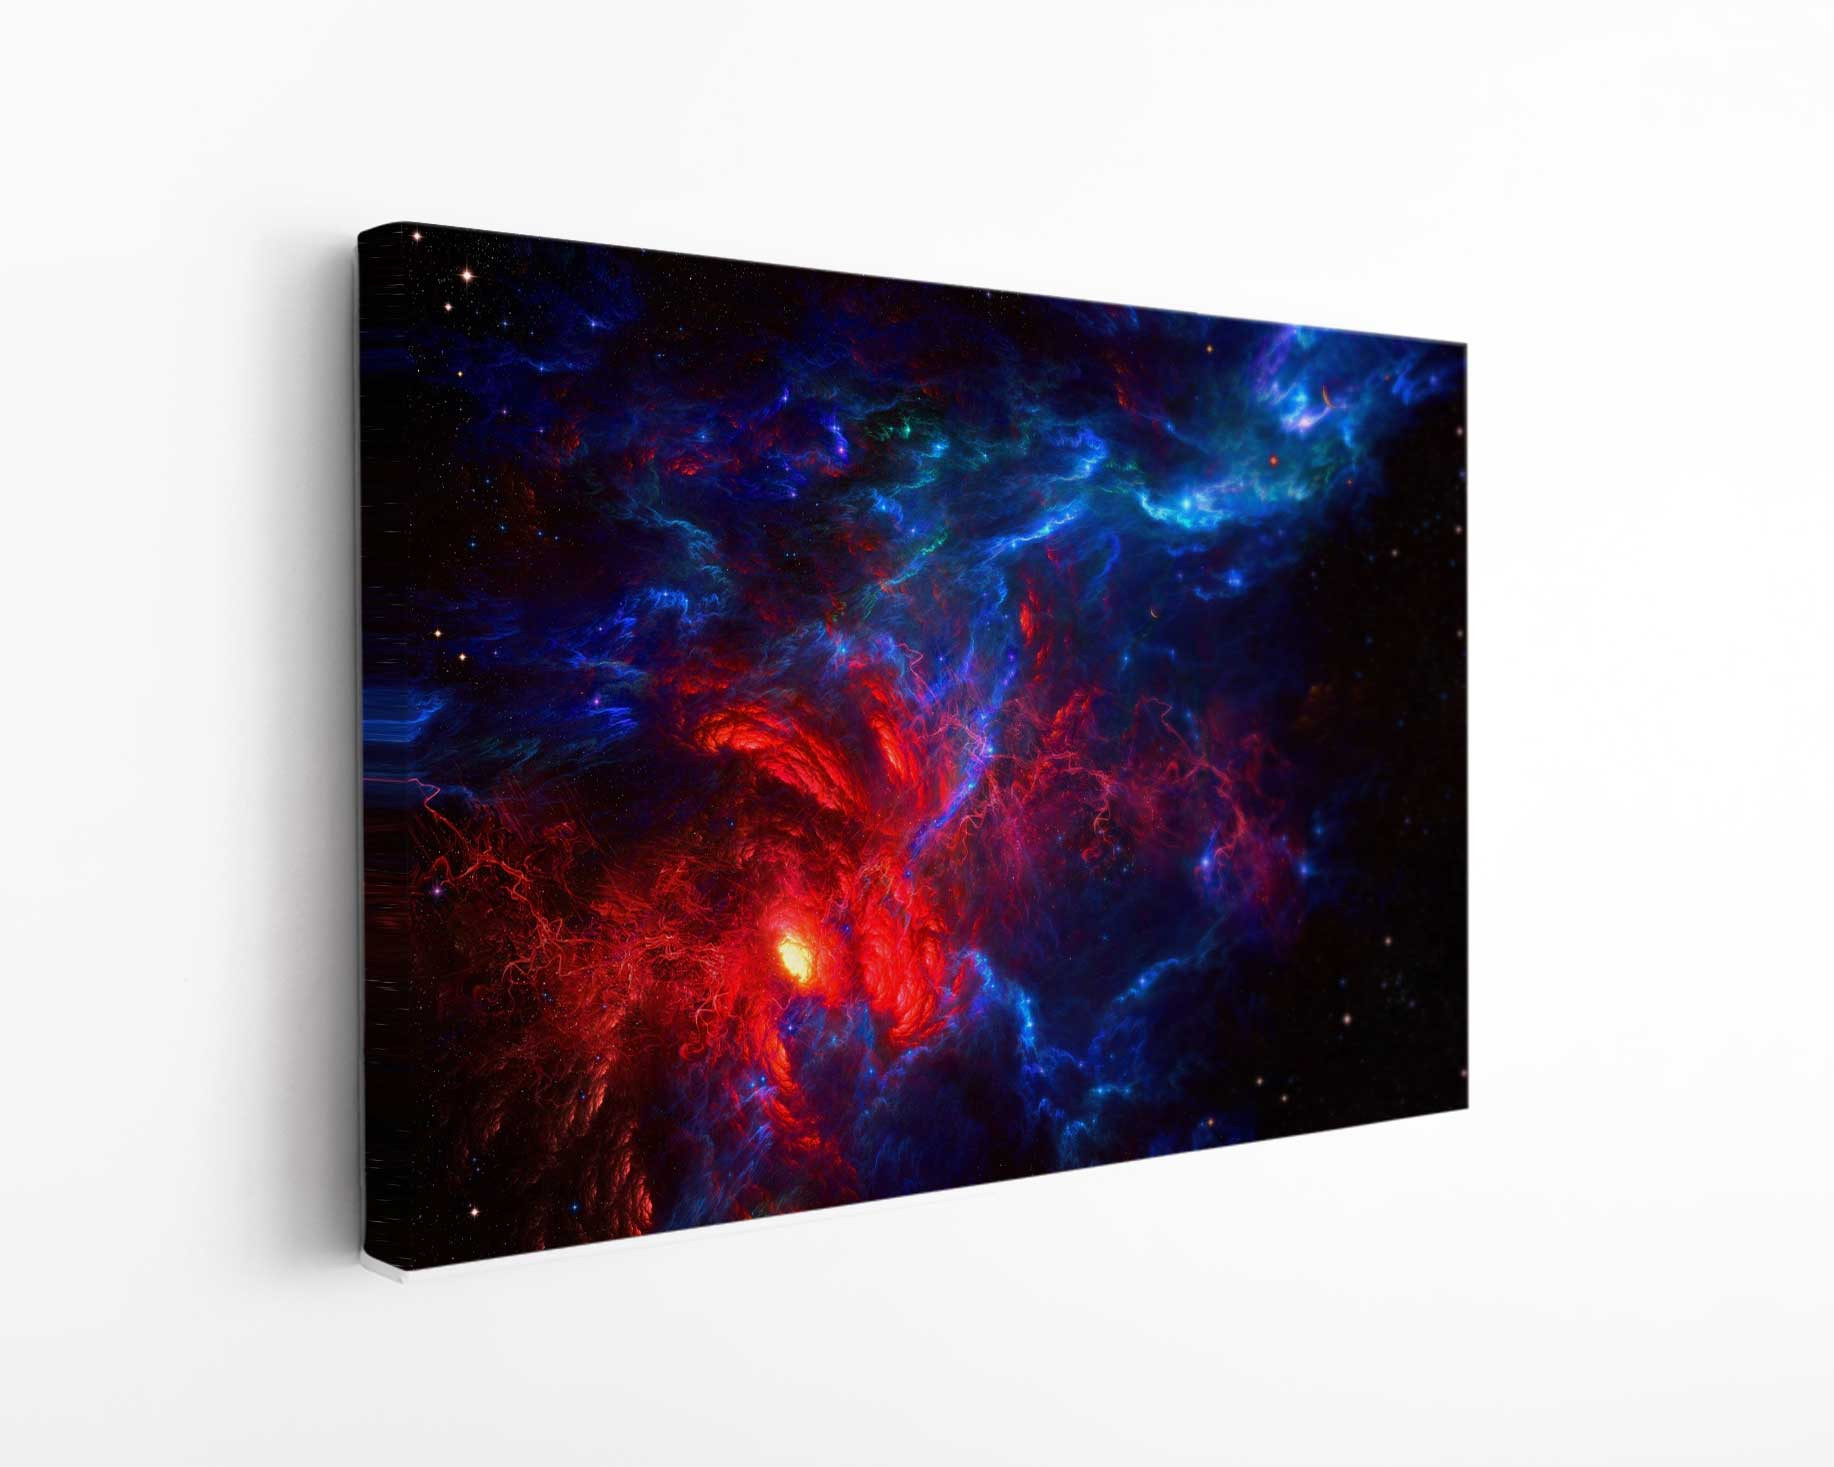 Galaxy Red Nebula Space Star Canvas Print Wall Art